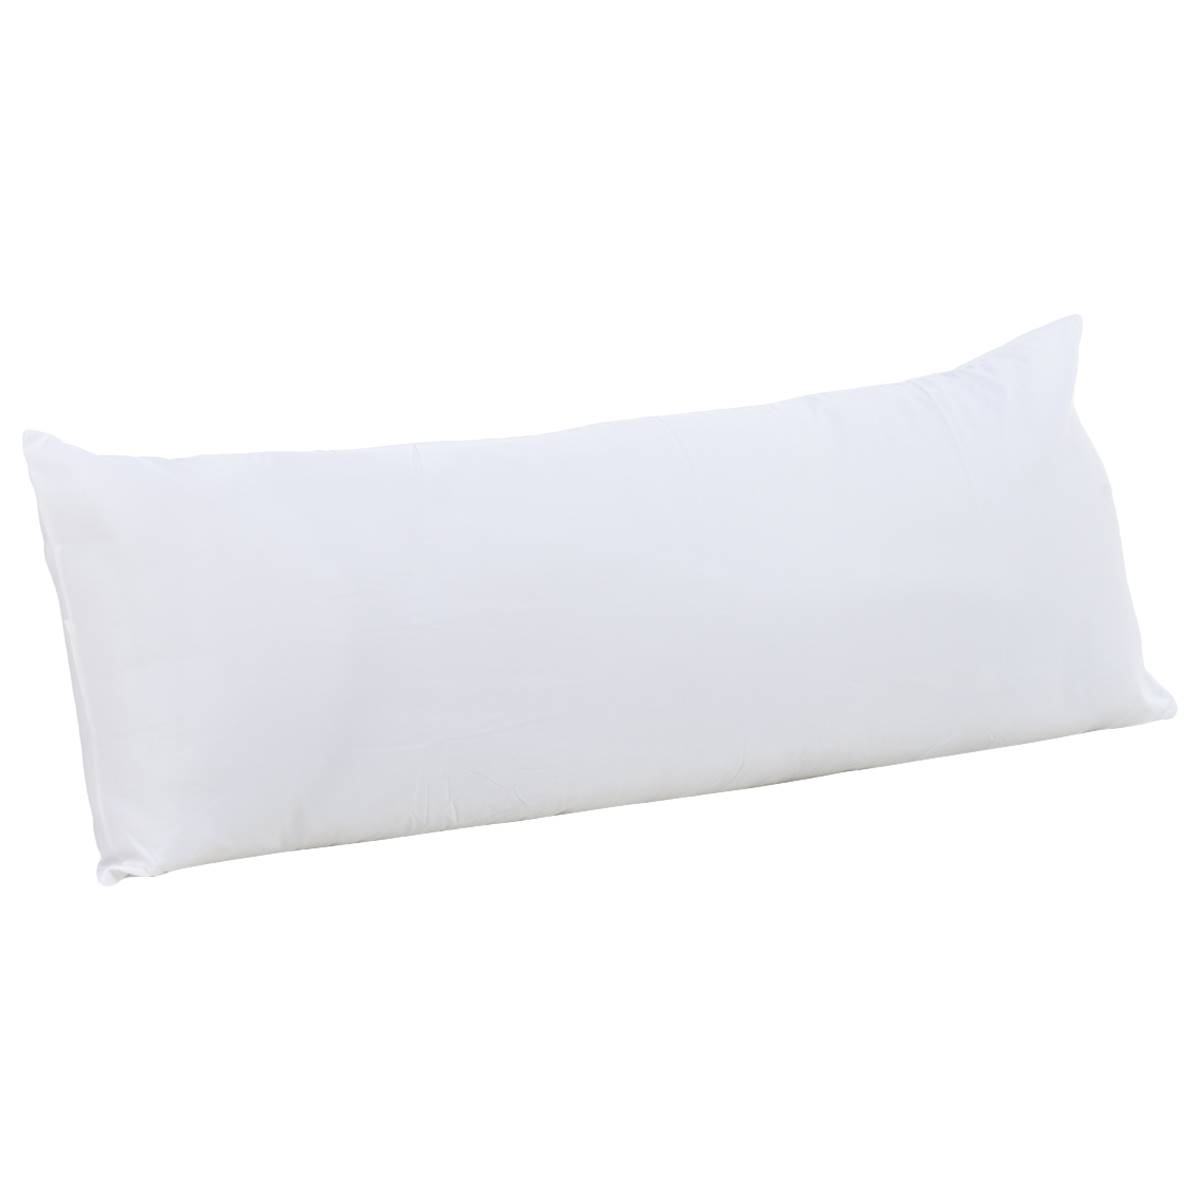 Sealy(R) Body Pillow